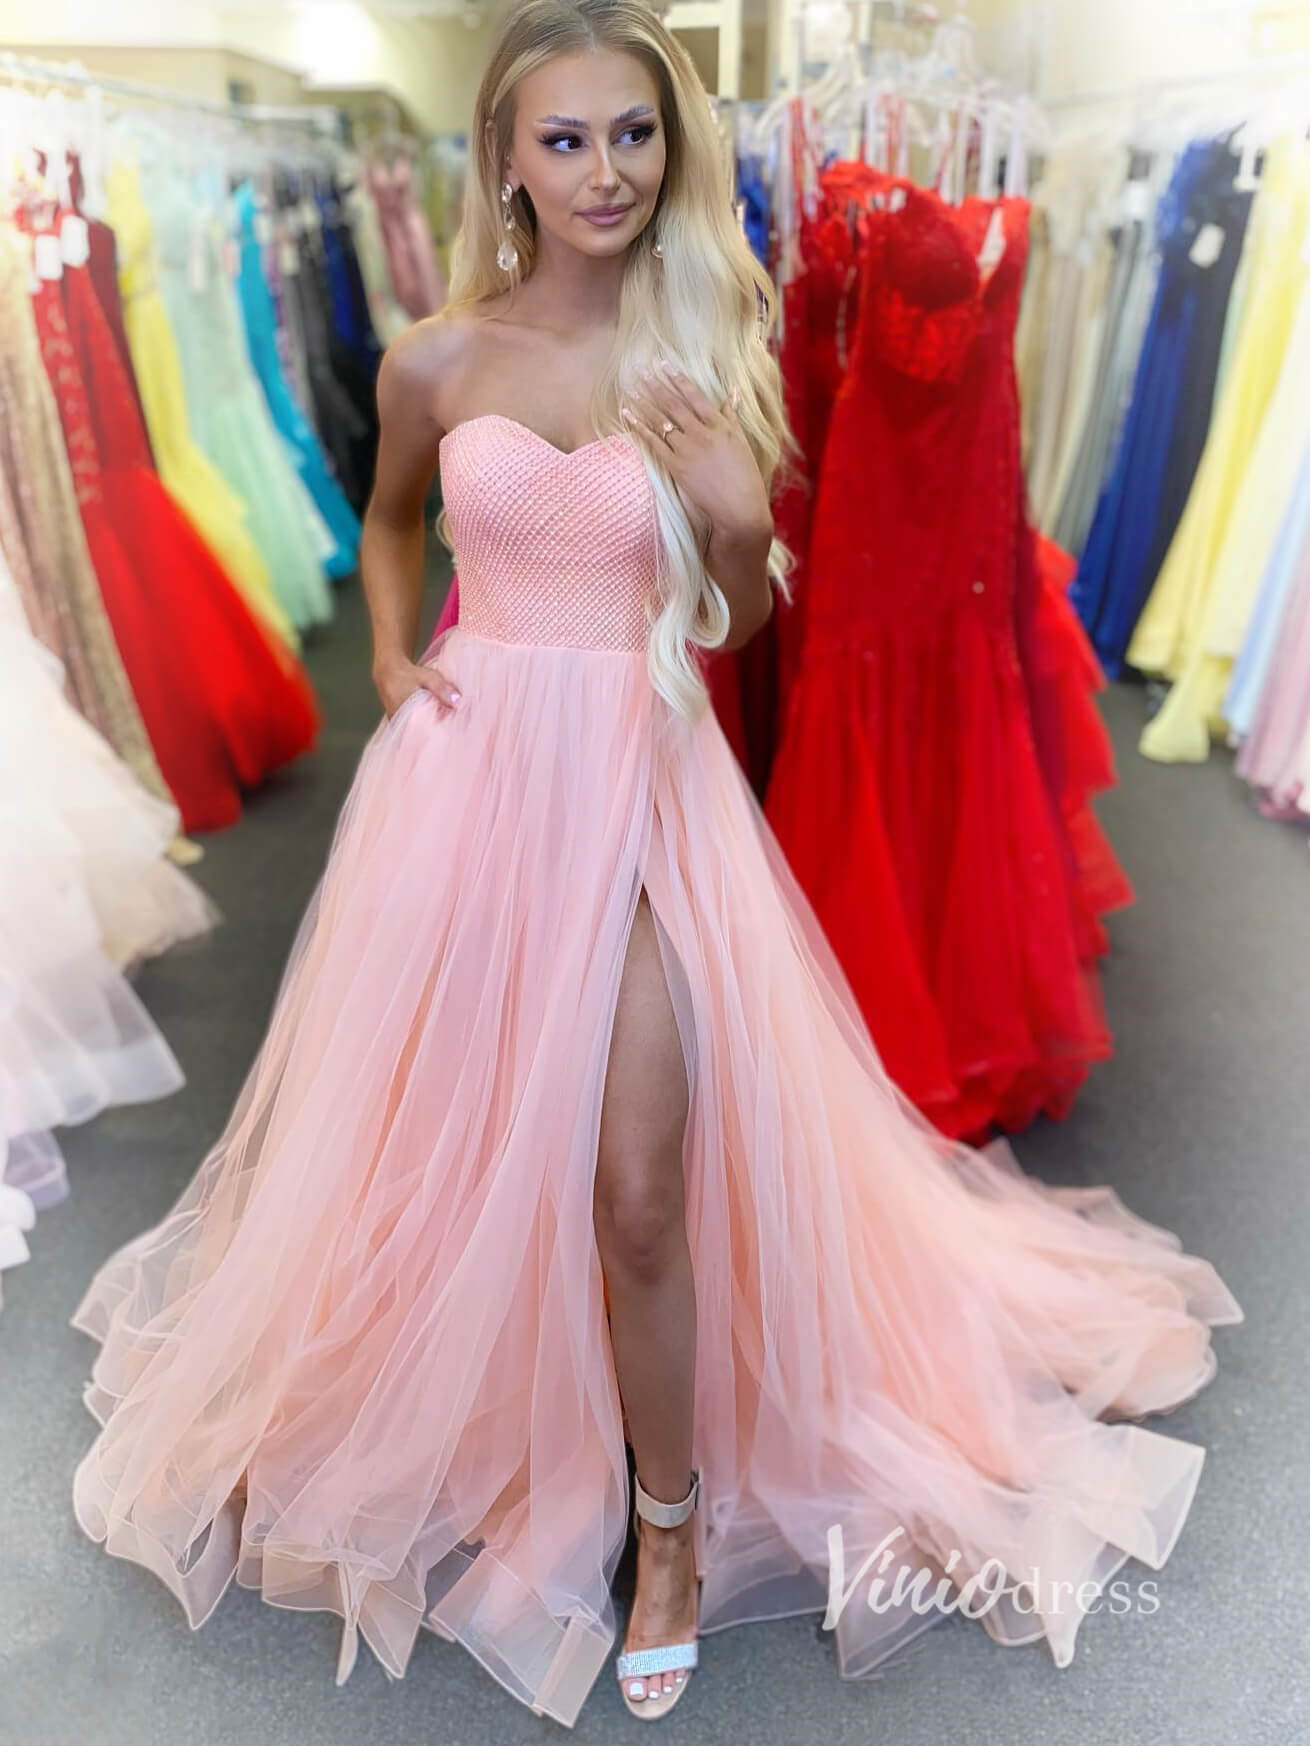 Blush Pink Sweetheart Neck Prom Dresses With Pockets Strapless Evening Dress FD2945-prom dresses-Viniodress-Blush Pink-Custom Size-Viniodress